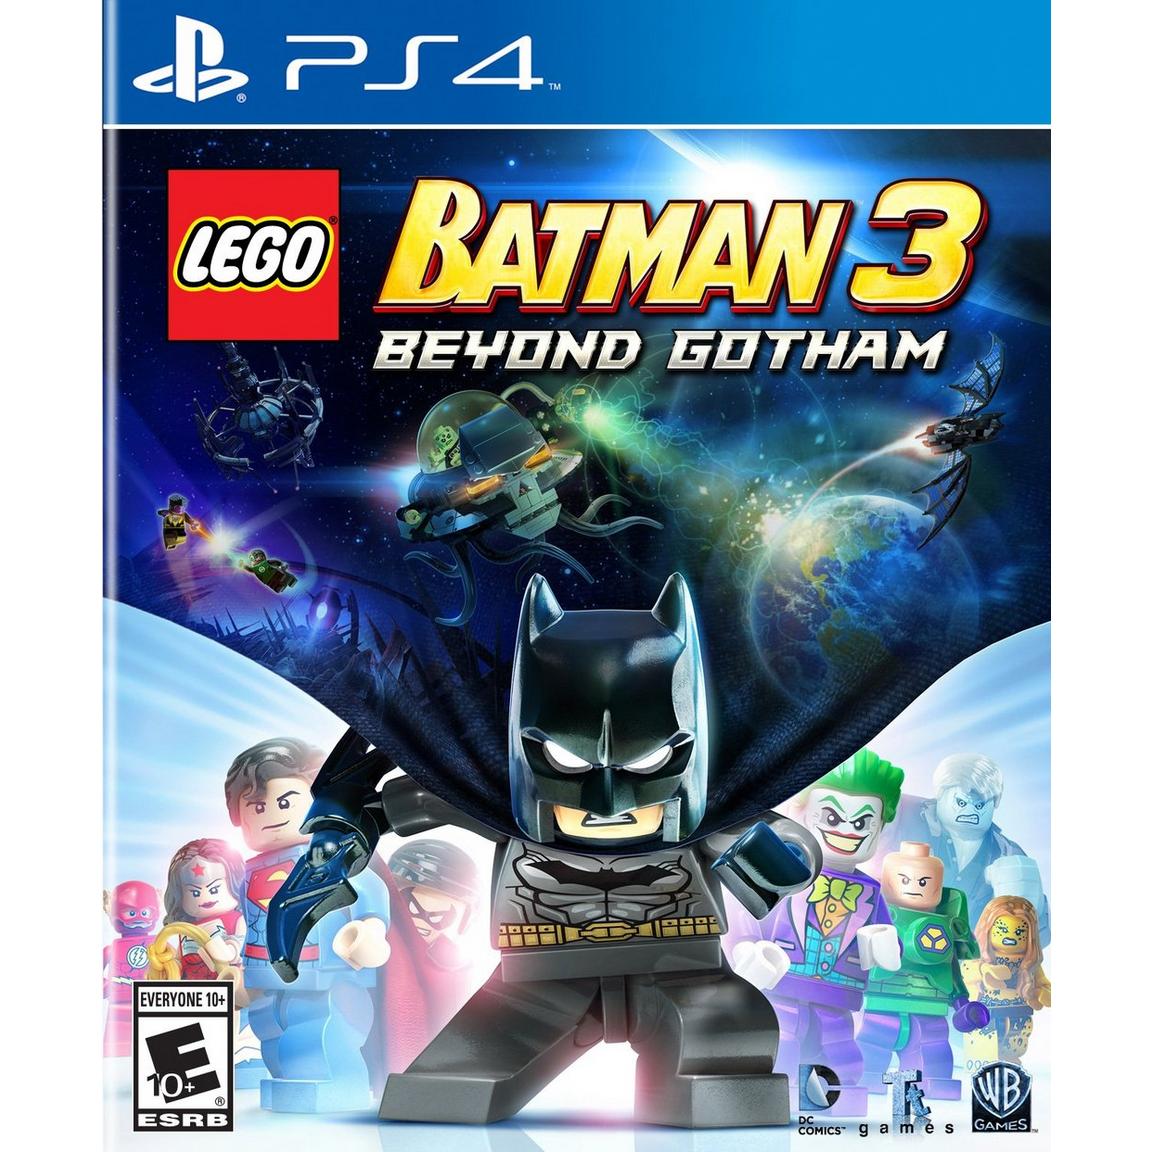 LEGO Batman 3: Beyond Gotham - PlayStation 4, Pre-Owned -  Warner Bros. Interactive Entertainment